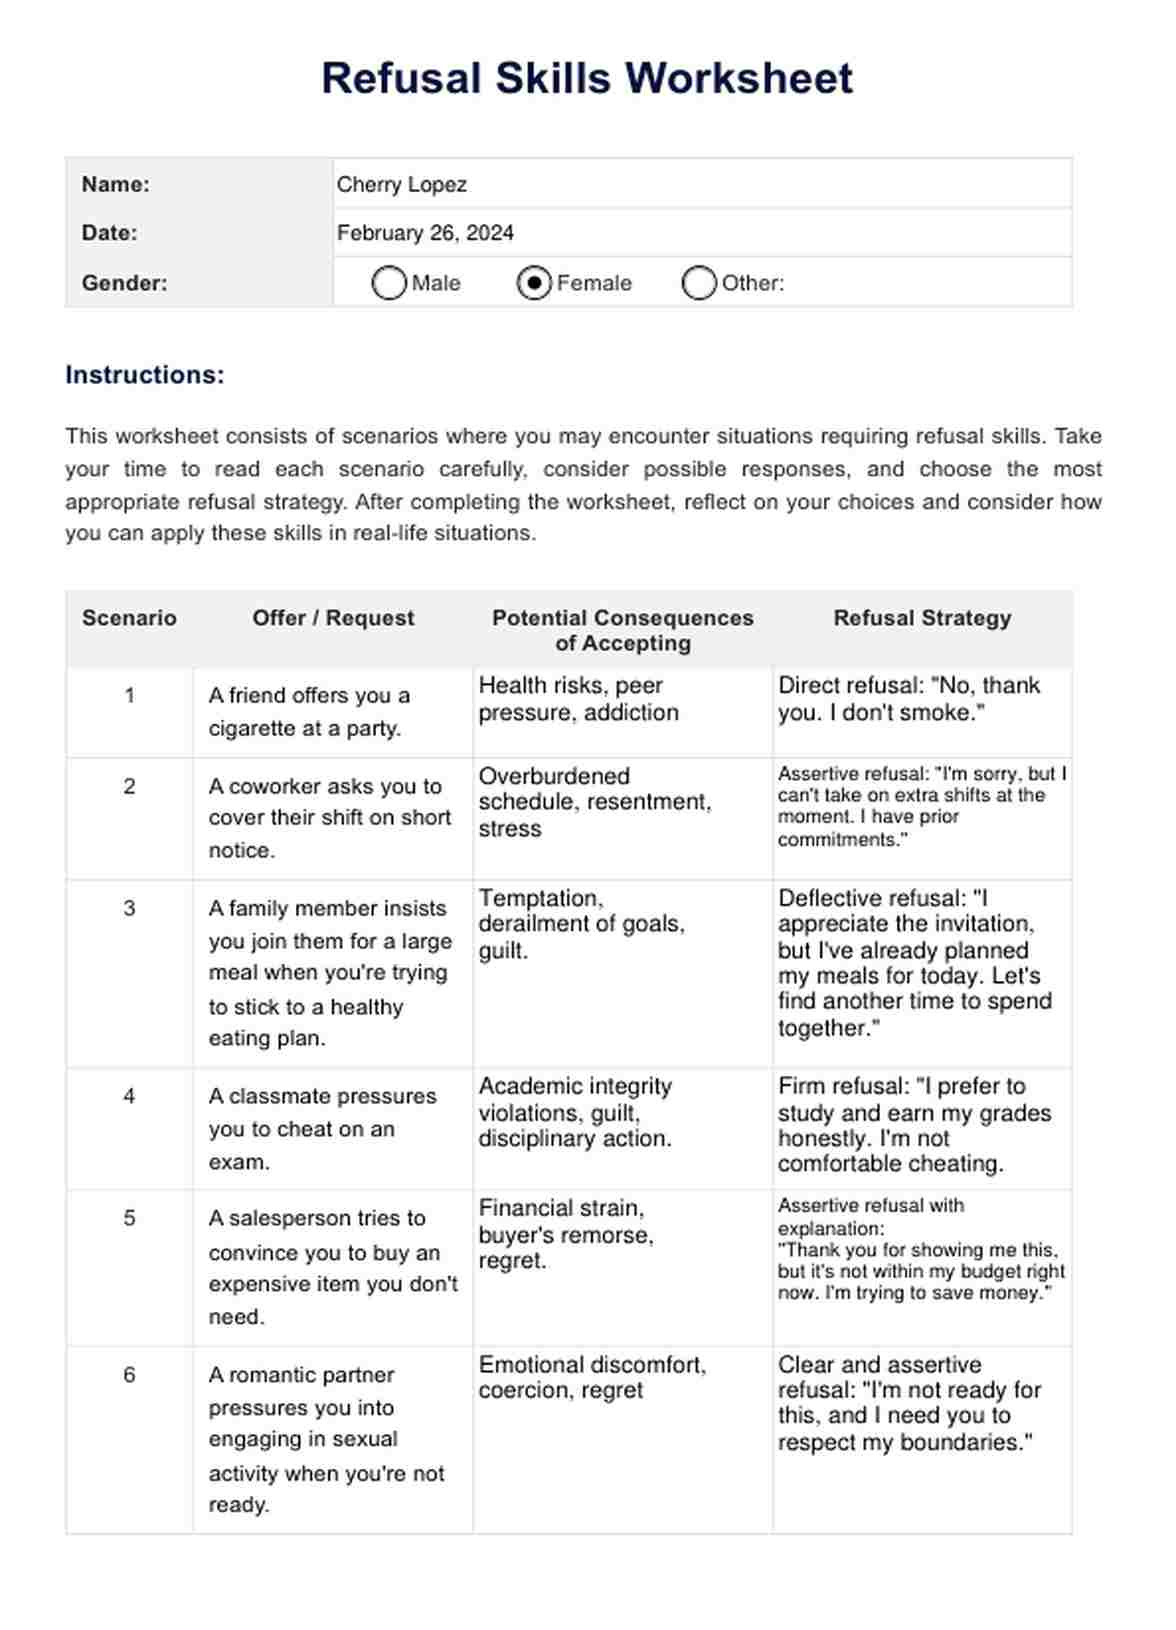 Refusal Skills Worksheet PDF Example